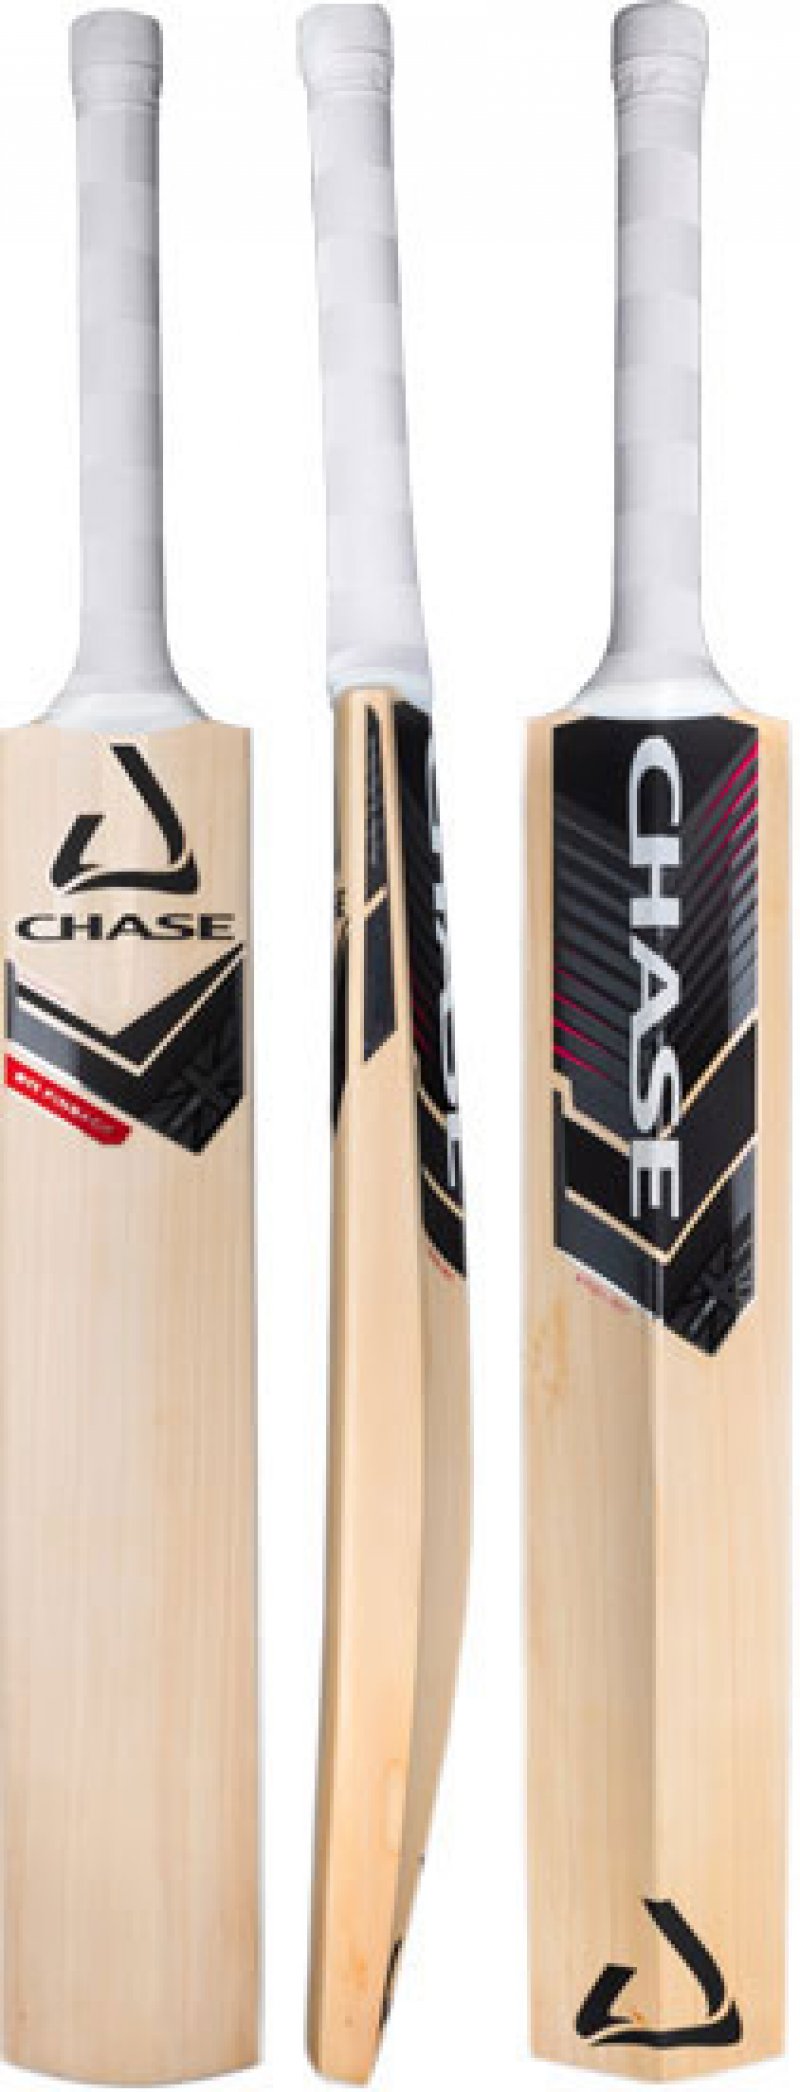 Chase Finback R7 Cricket Bat